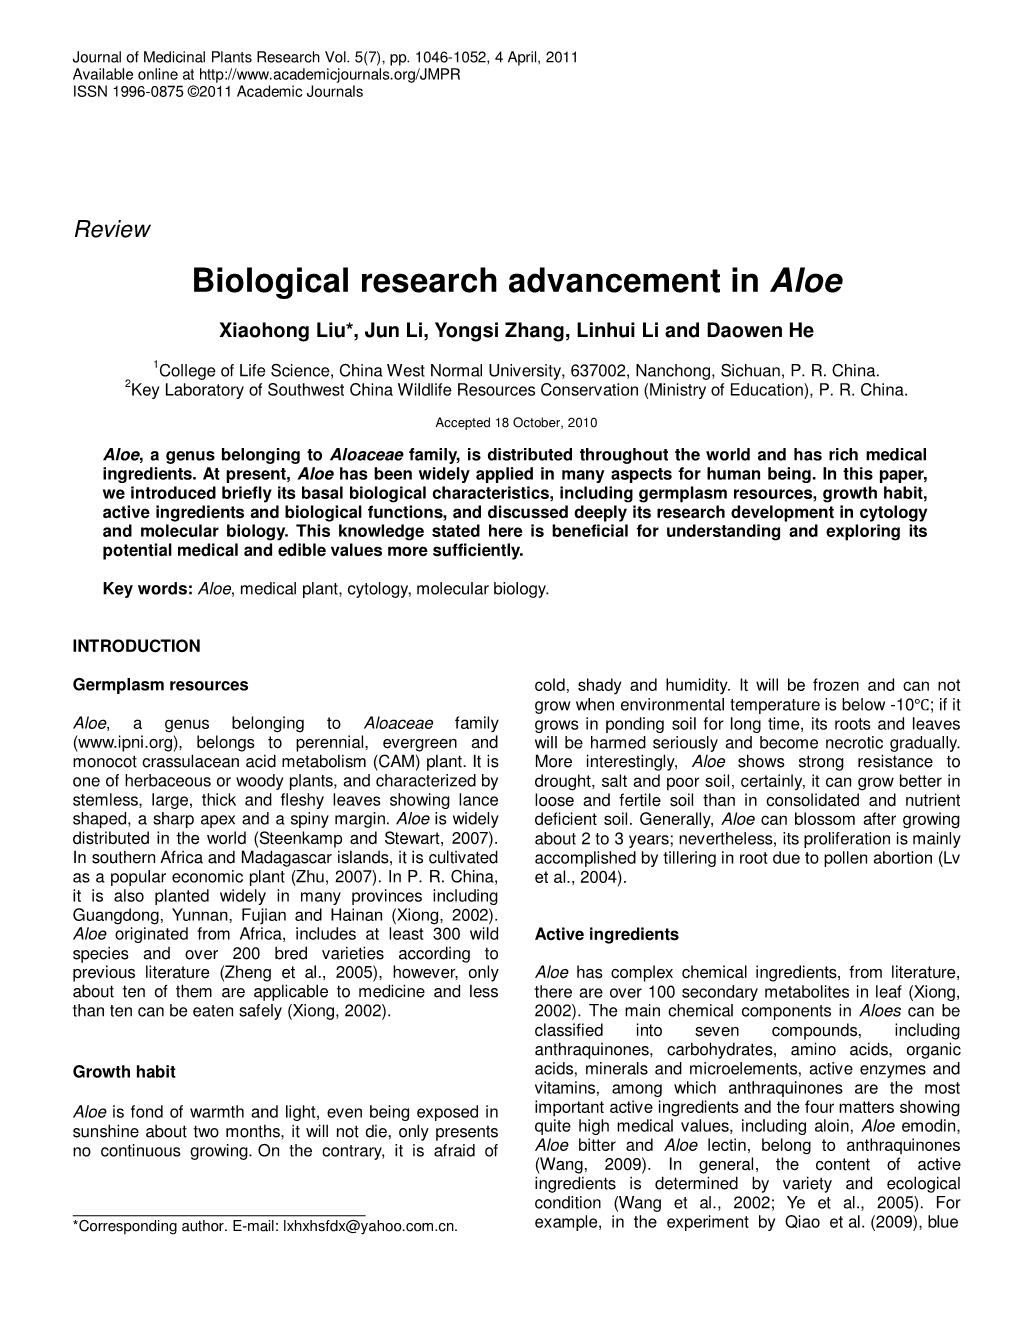 Biological Research Advancement in Aloe